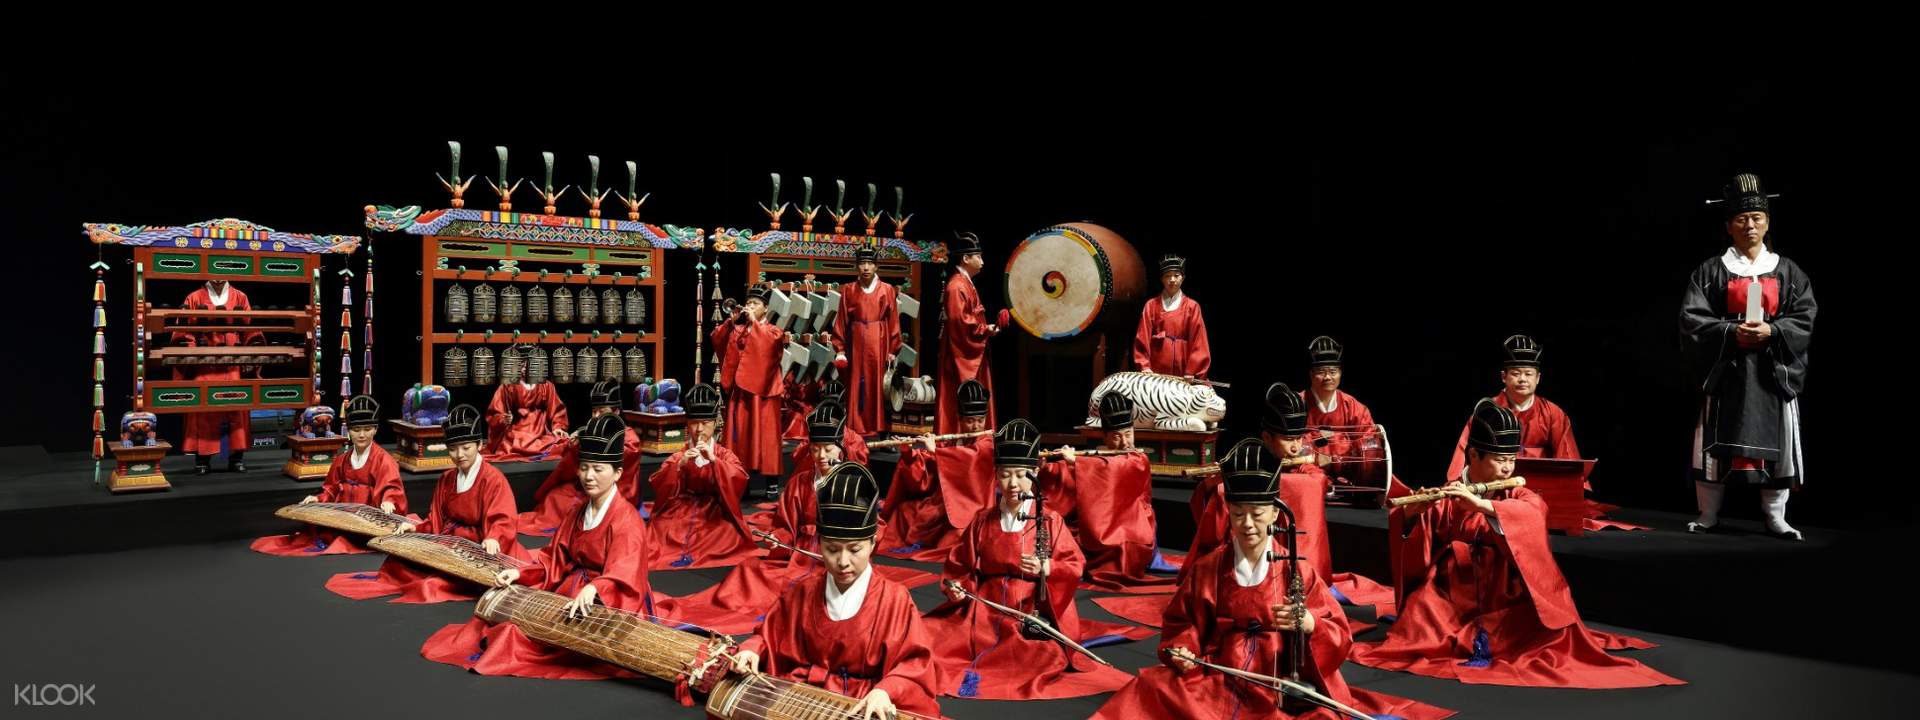 Saturday Performance of Korean Music & Dance at the National Gugak